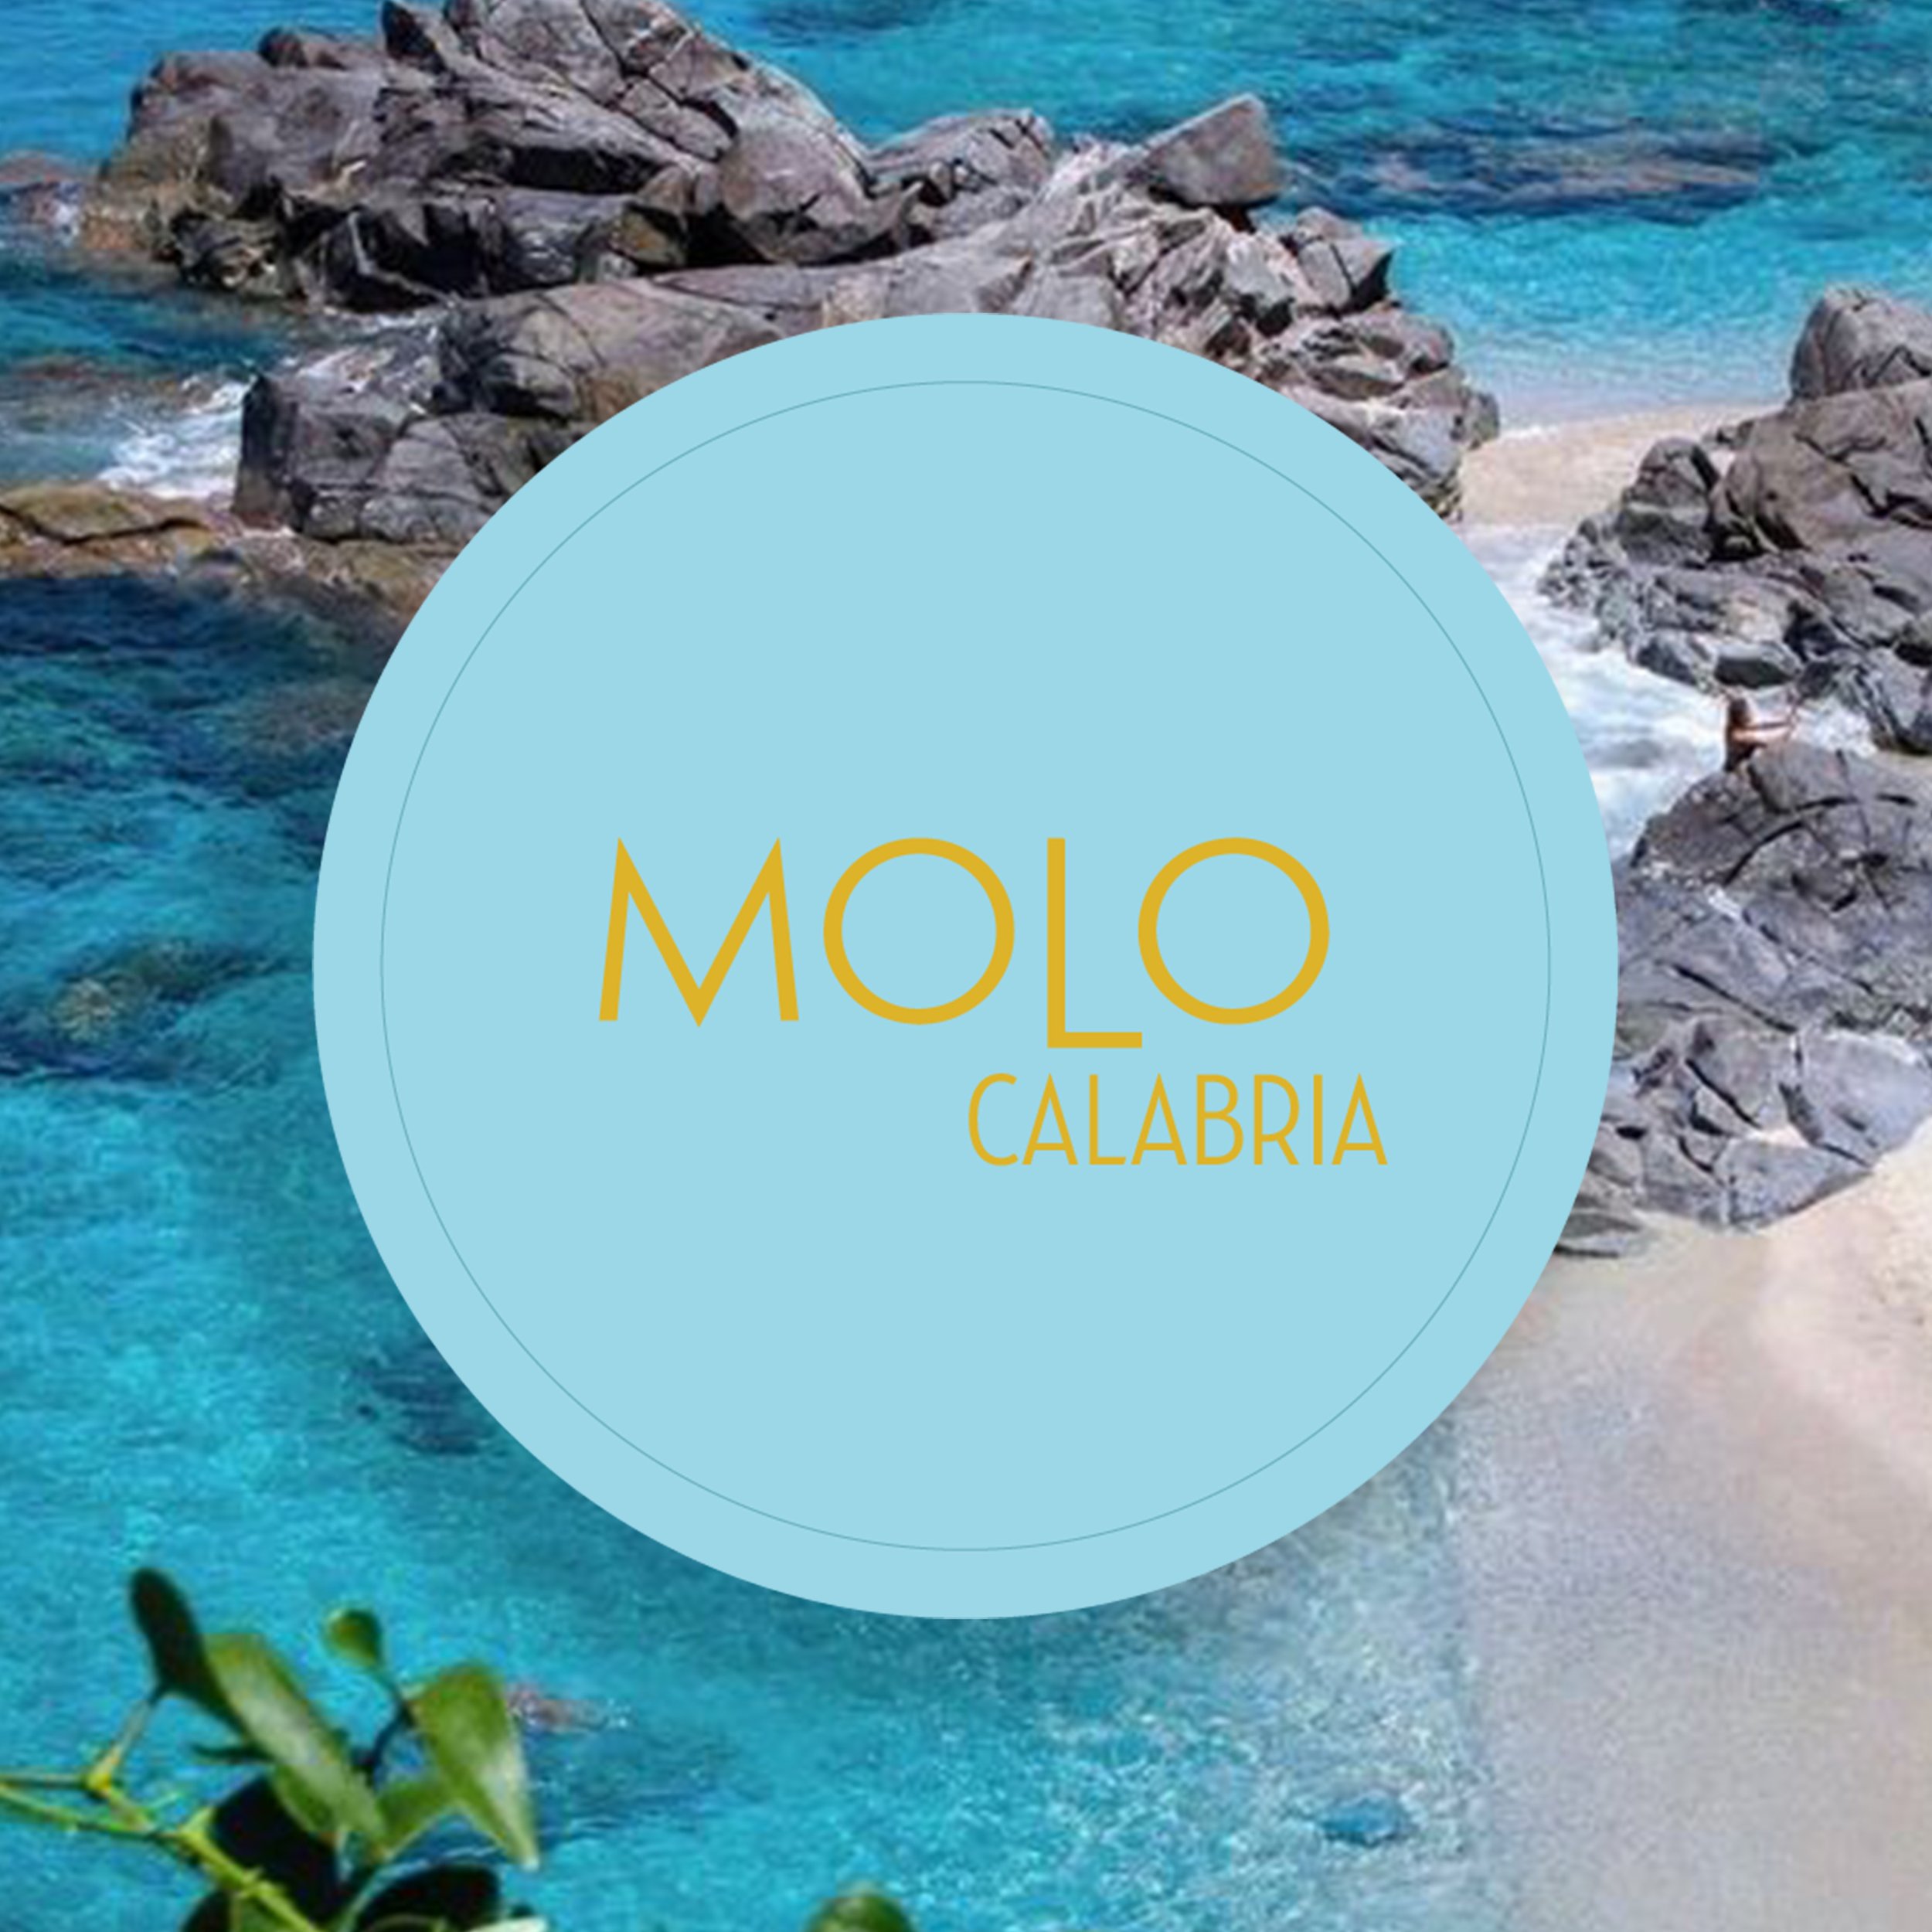 MOLO Calabria logo and background.jpg